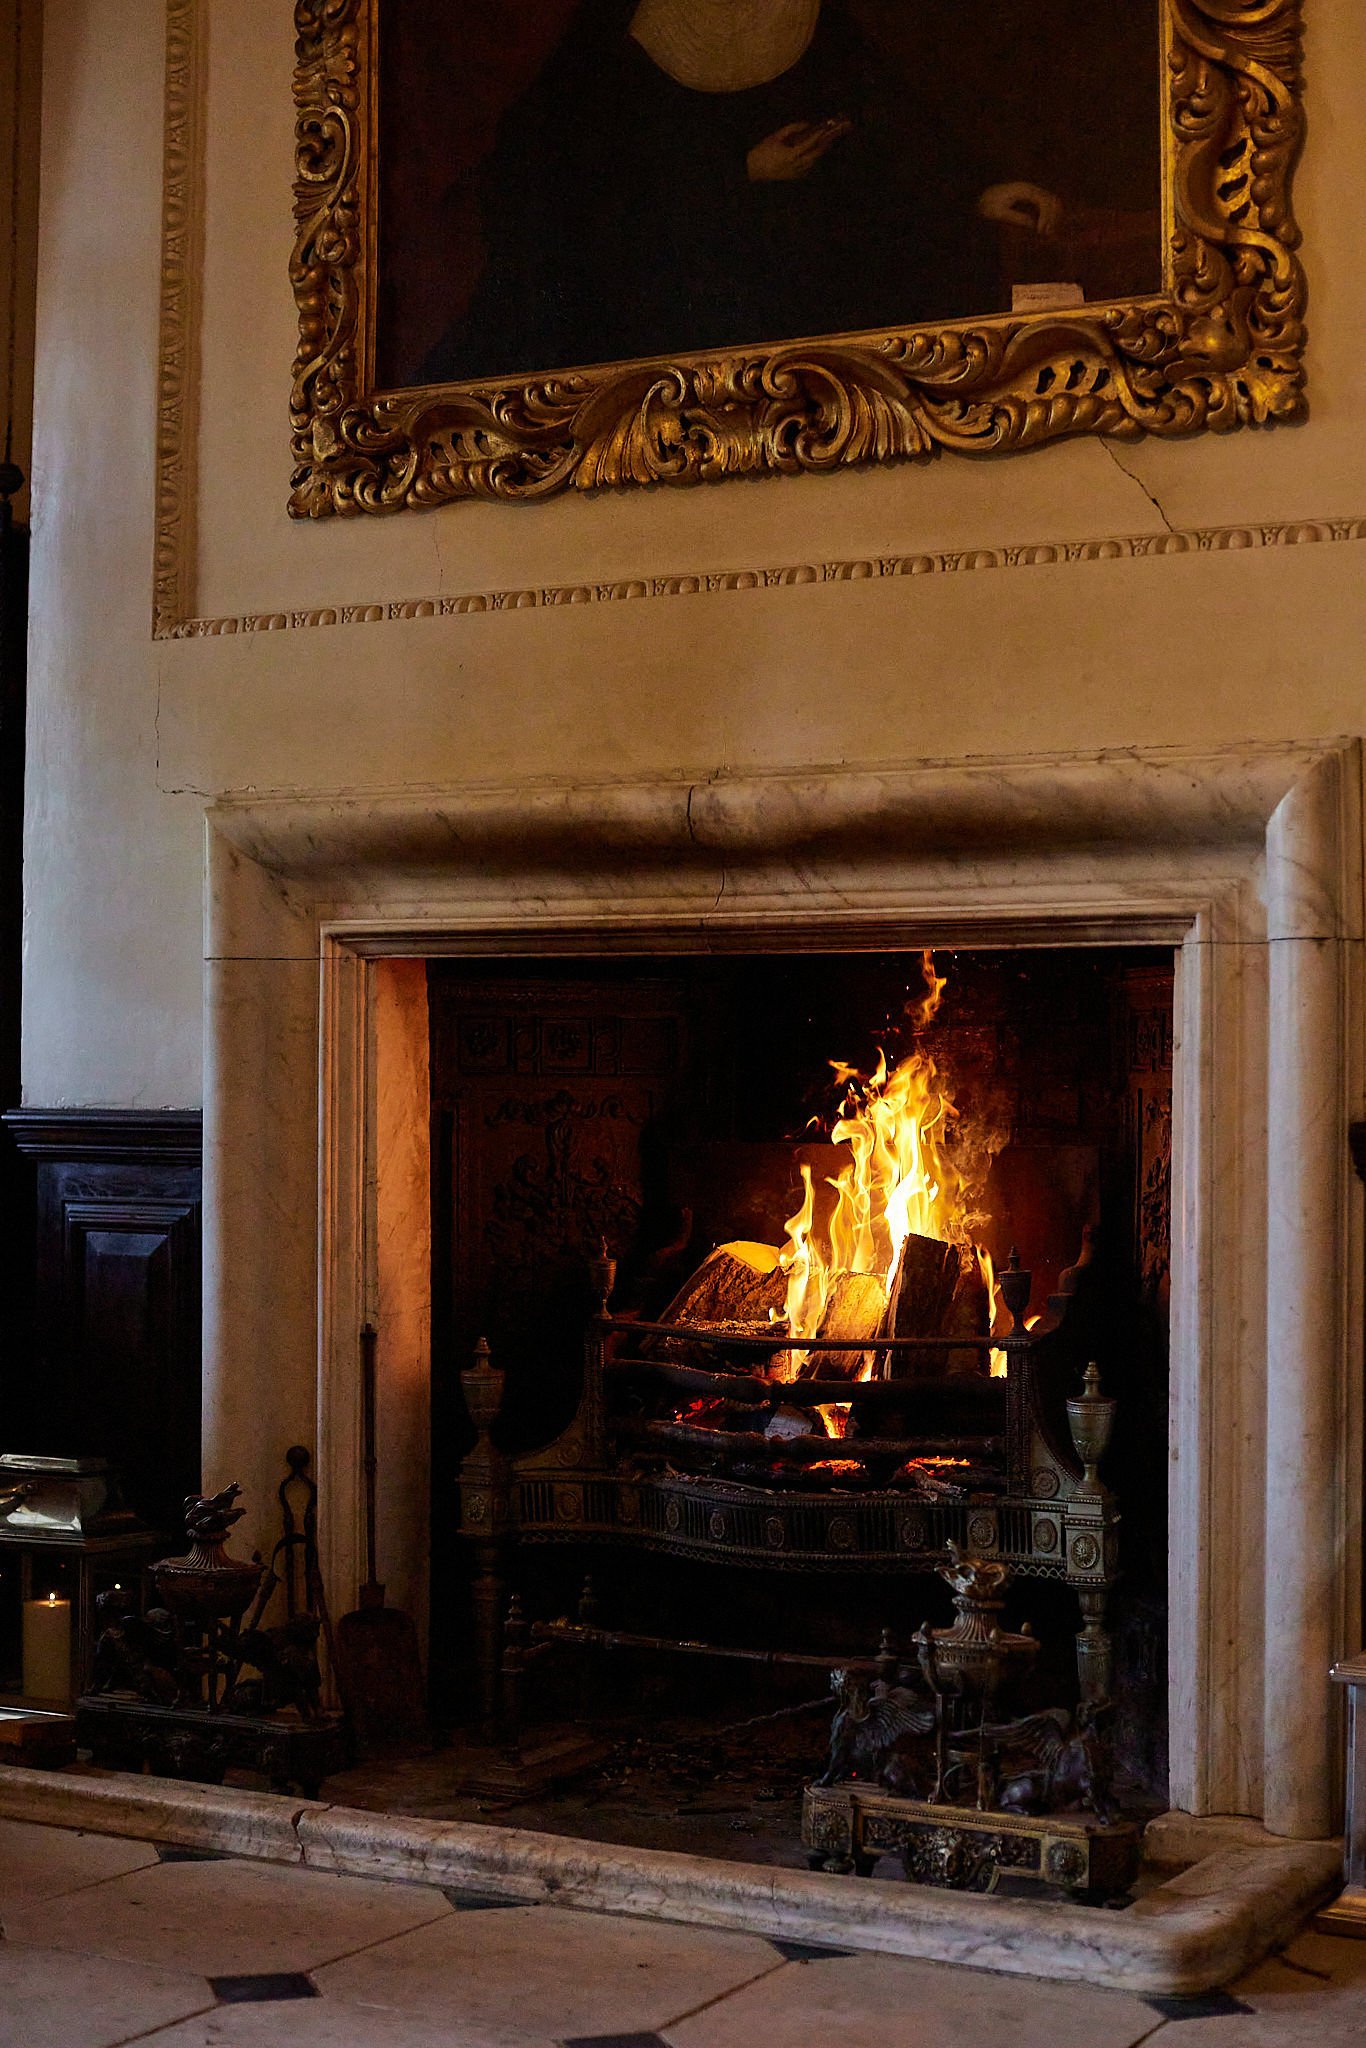 Pylewell Park fireplace